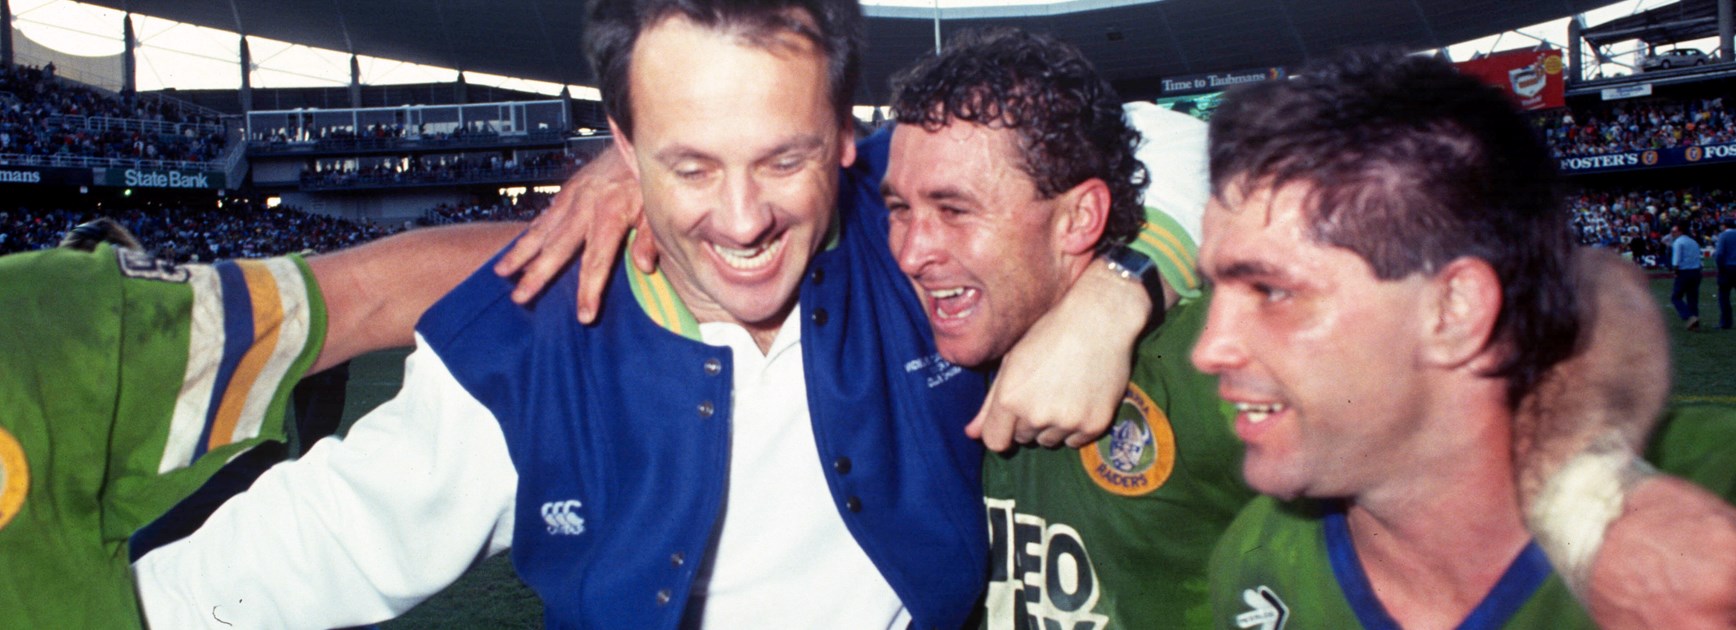 Tim Sheens and Ricky Stuart celebrate the 1990 grand final win.